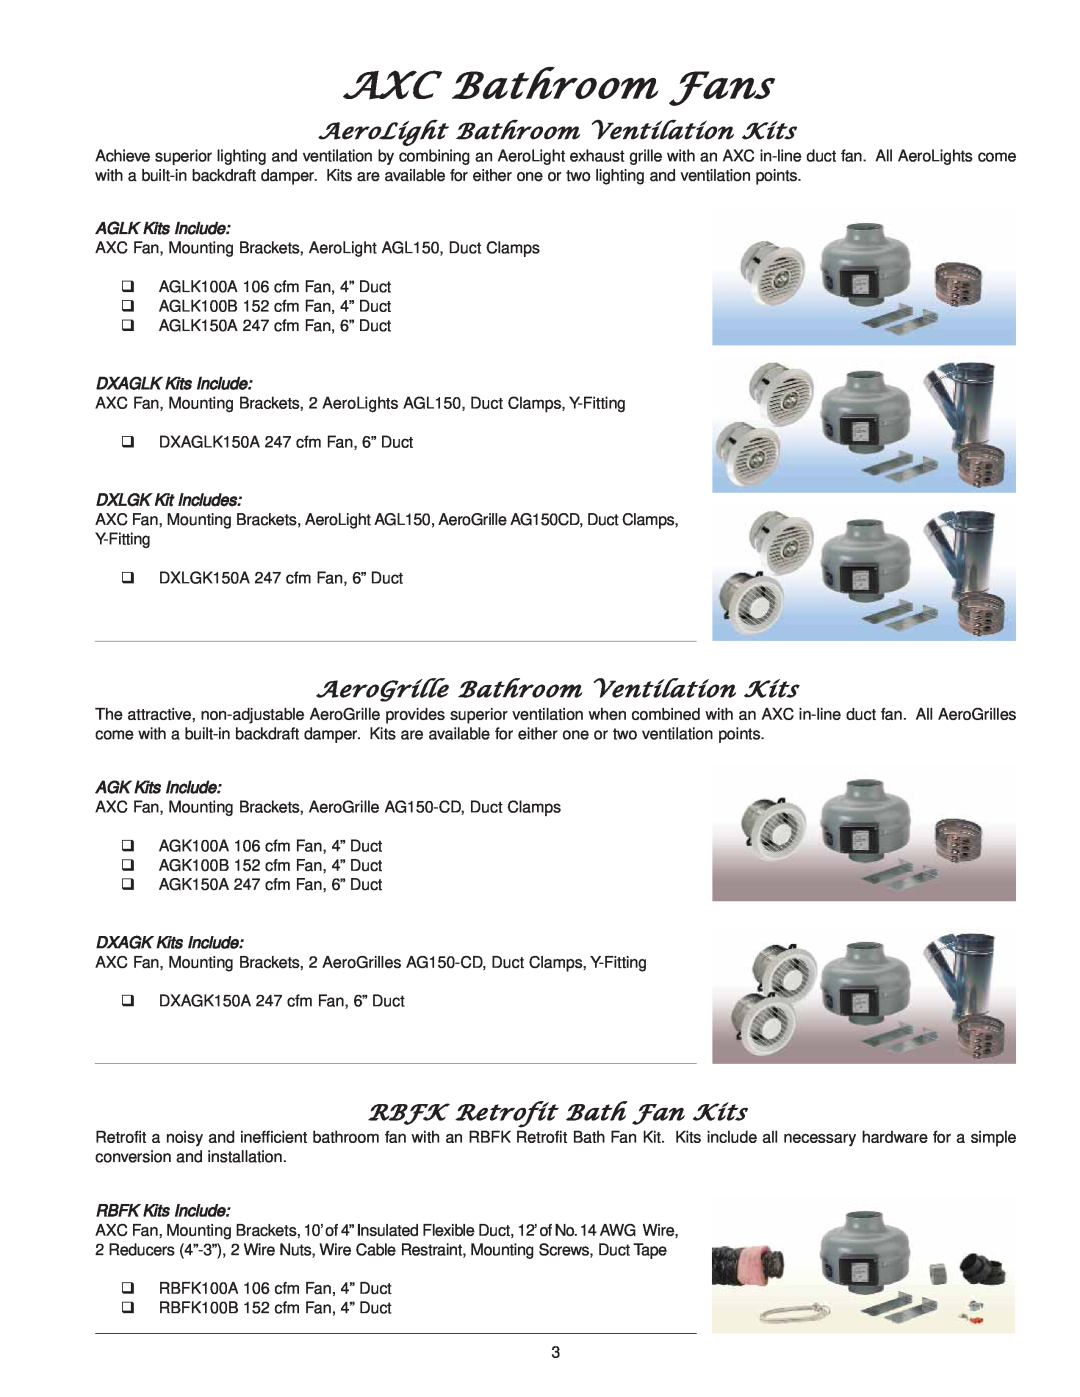 CFM AXC100B manual AeroLight Bathroom Ventilation Kits, AeroGrille Bathroom Ventilation Kits, RBFK Retrofit Bath Fan Kits 